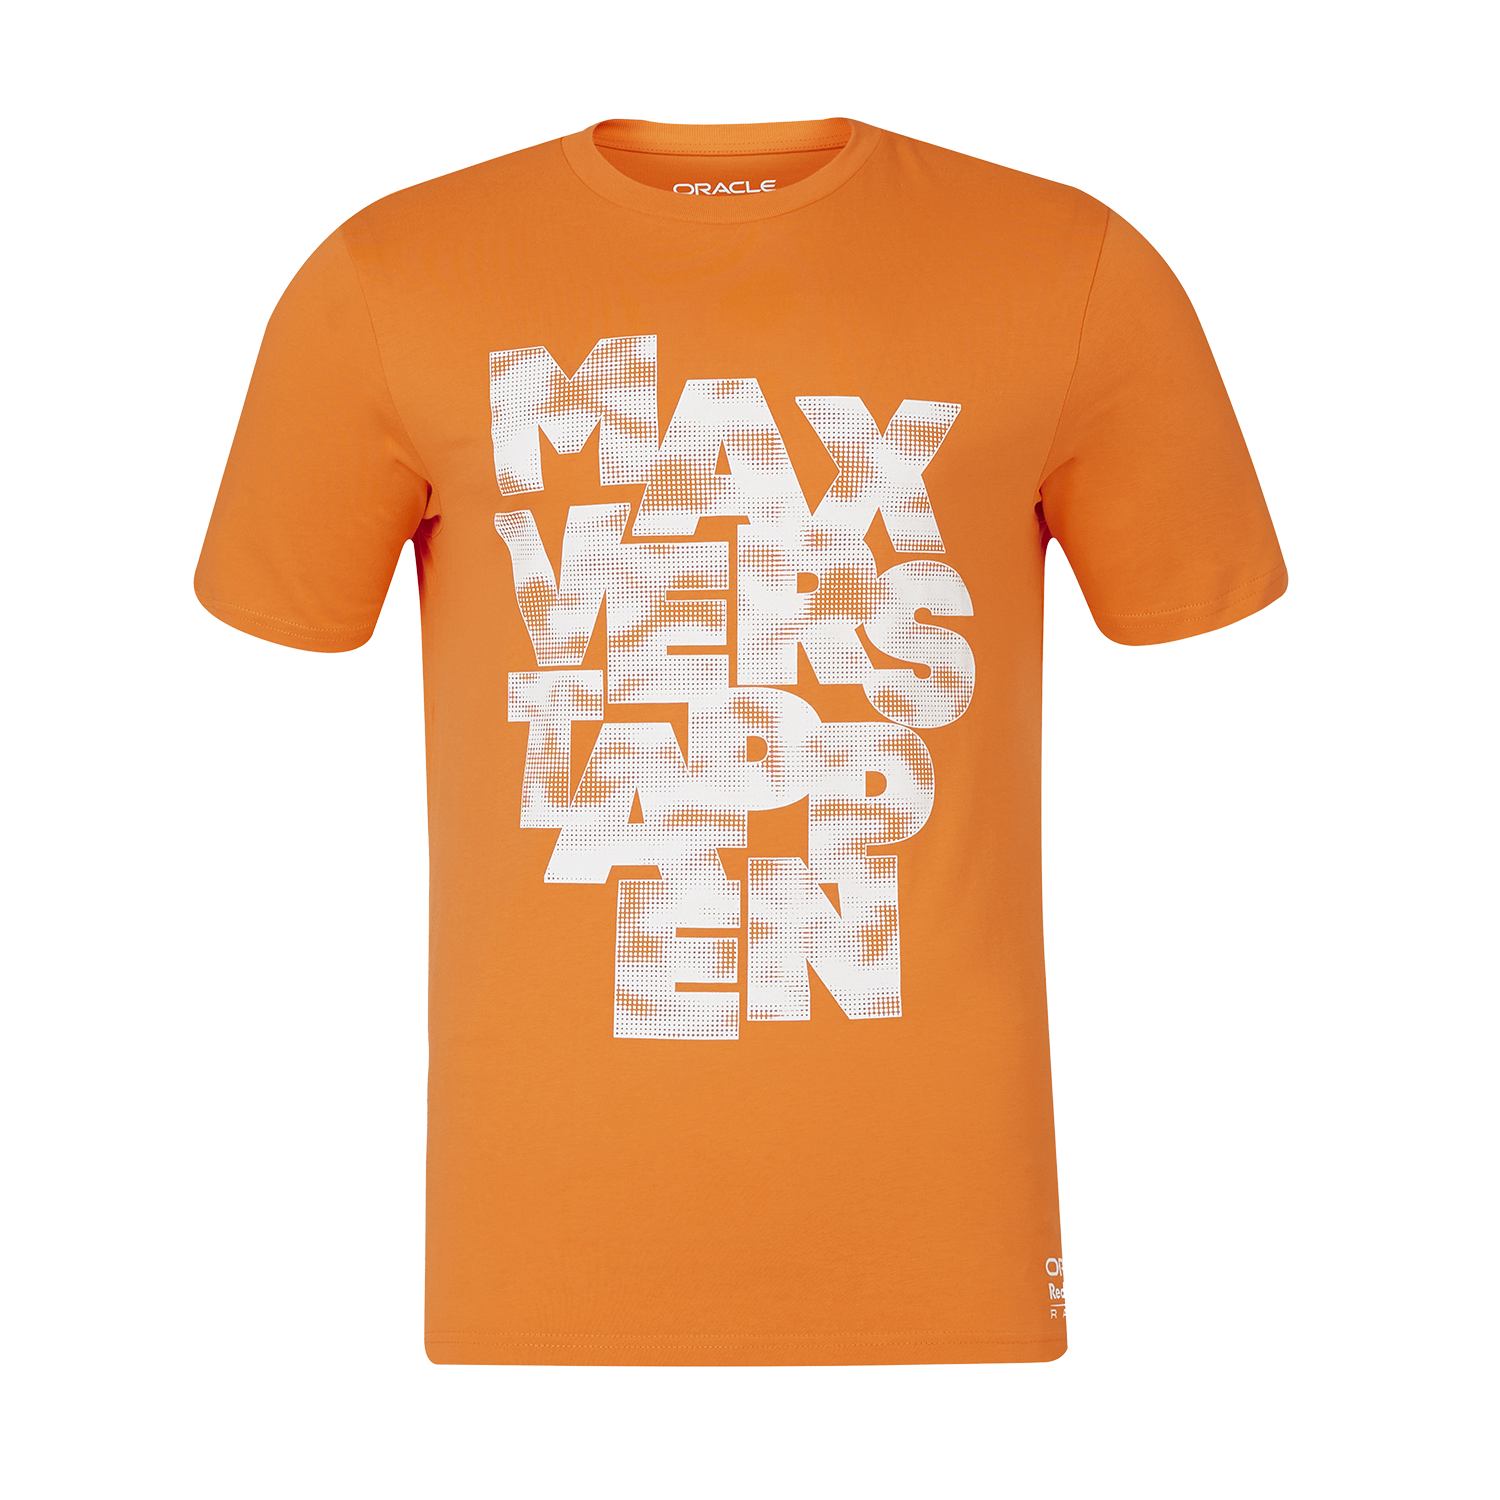 Max Verstappen T-shirt - XL - Red Bull Racing T-Shirt Oranje Max Expression